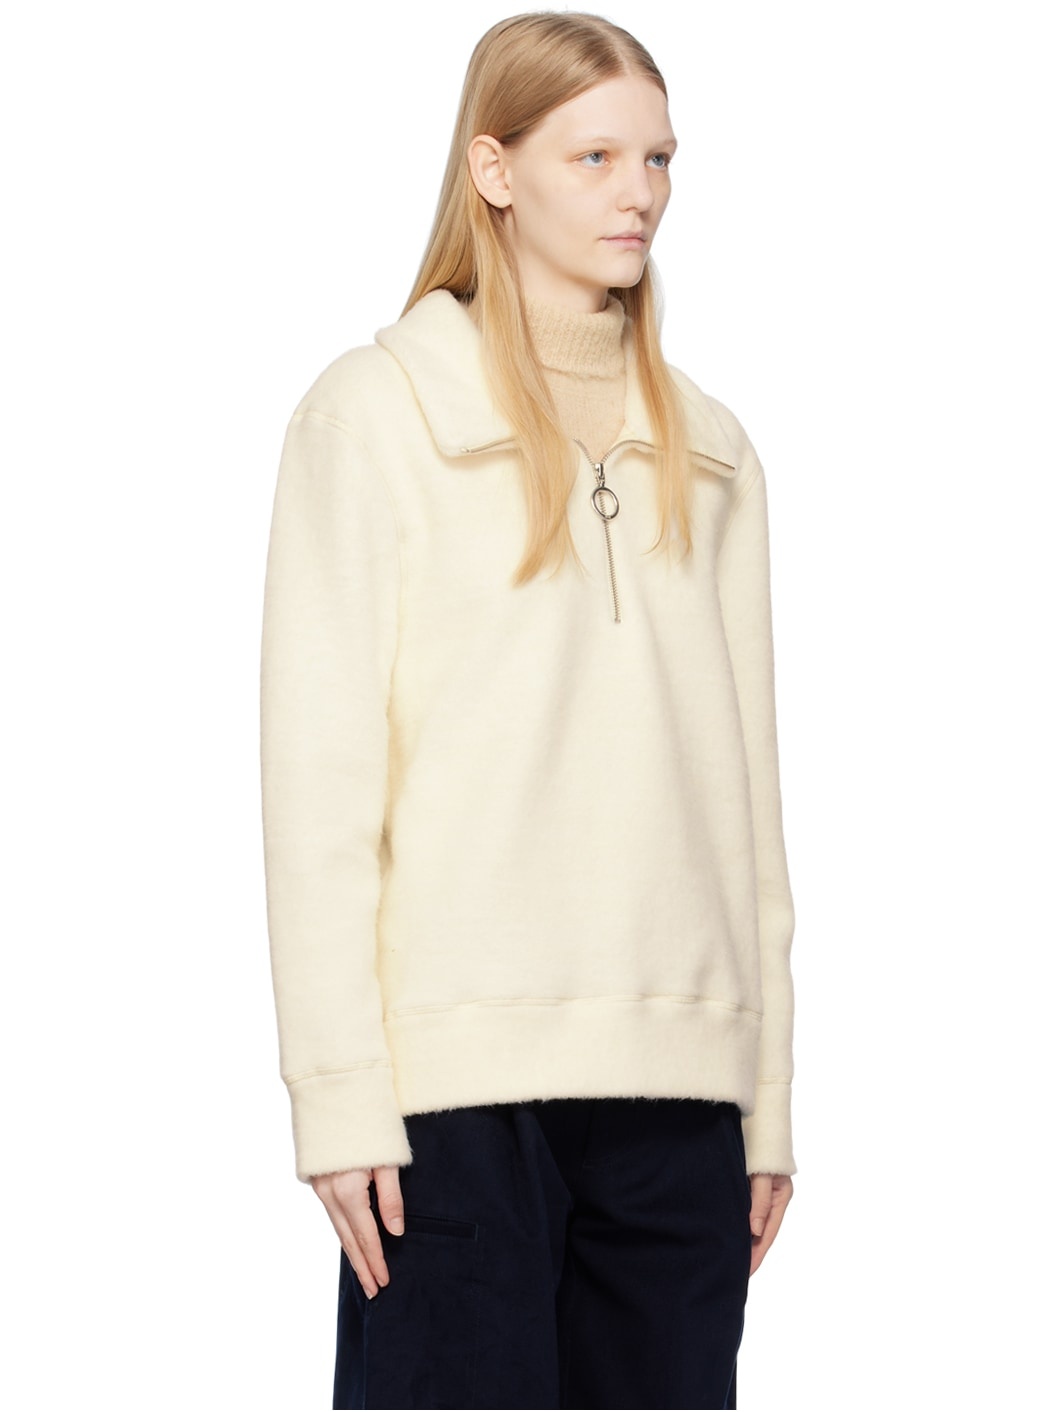 Off-White Half-Zip Sweater - 2